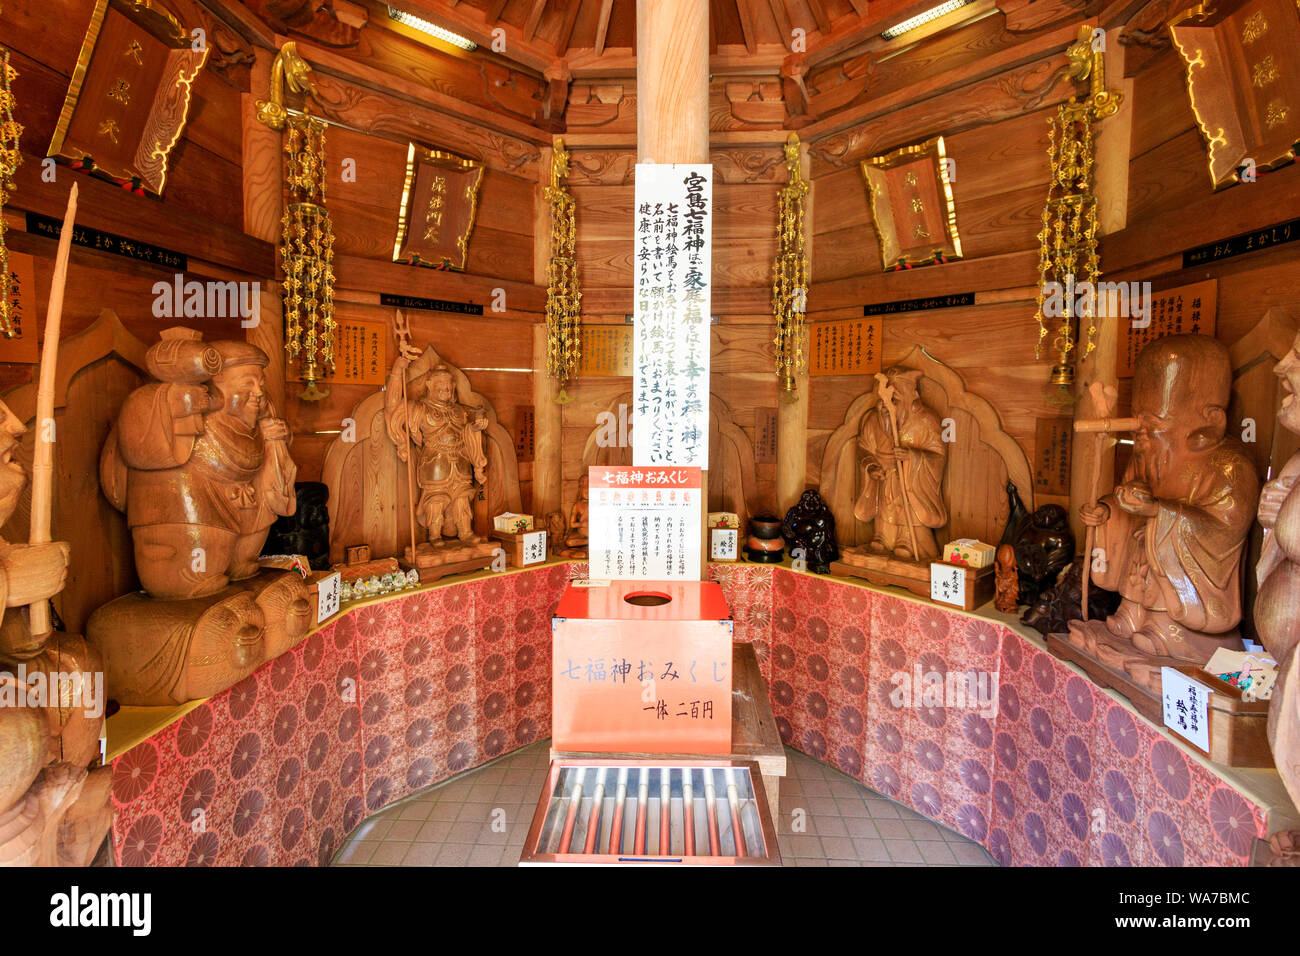 Japan, Miyajima. Daisho-in temple. Interior of the octagonal Hakkaku Manpuku-do Hall made of Japanese zelkova with the Seven Deities of Good Fortune. Stock Photo